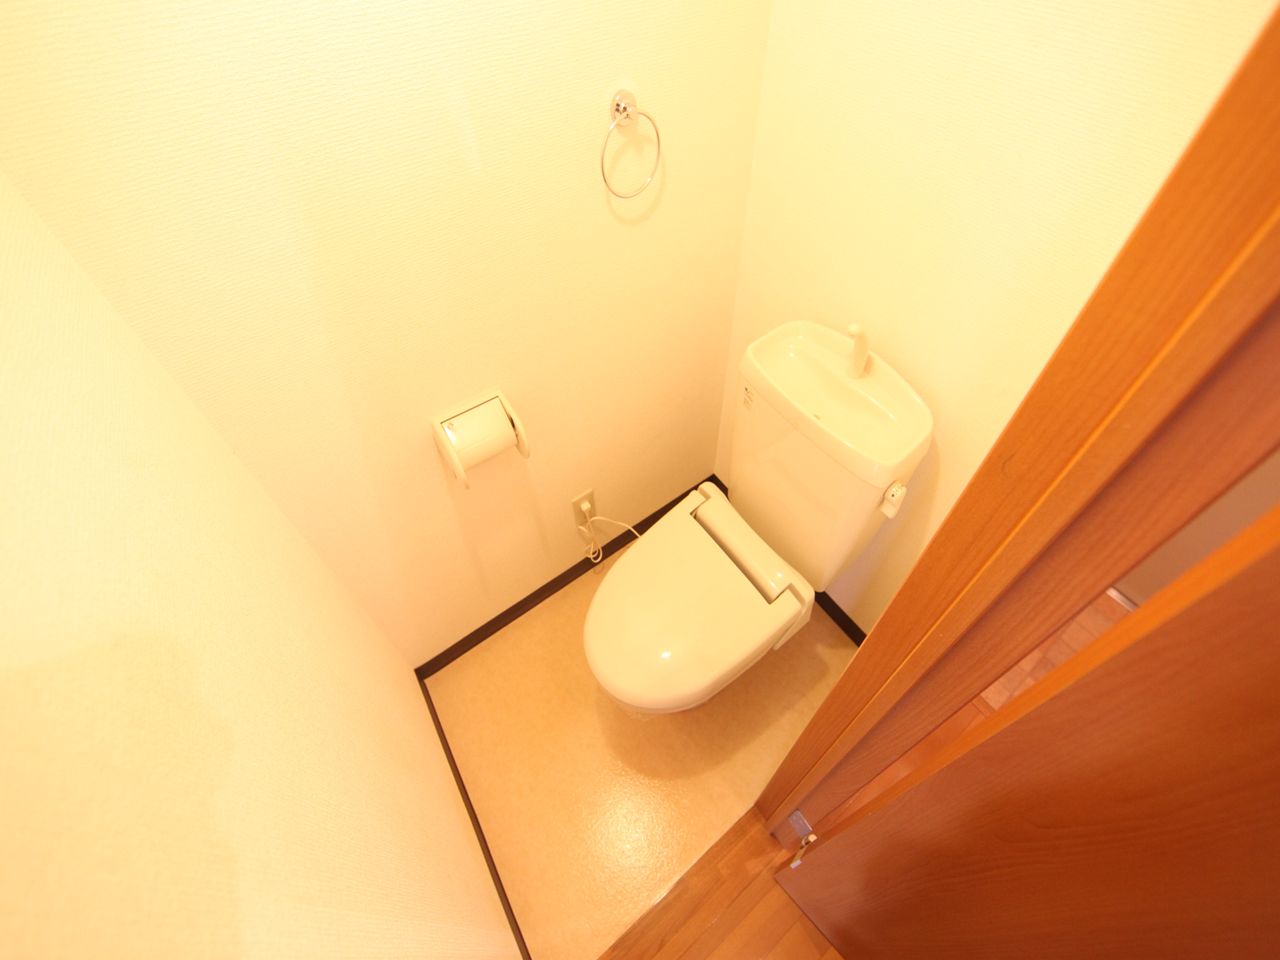 Toilet. WC Heating toilet seat Warm water washing toilet seat mounting Allowed